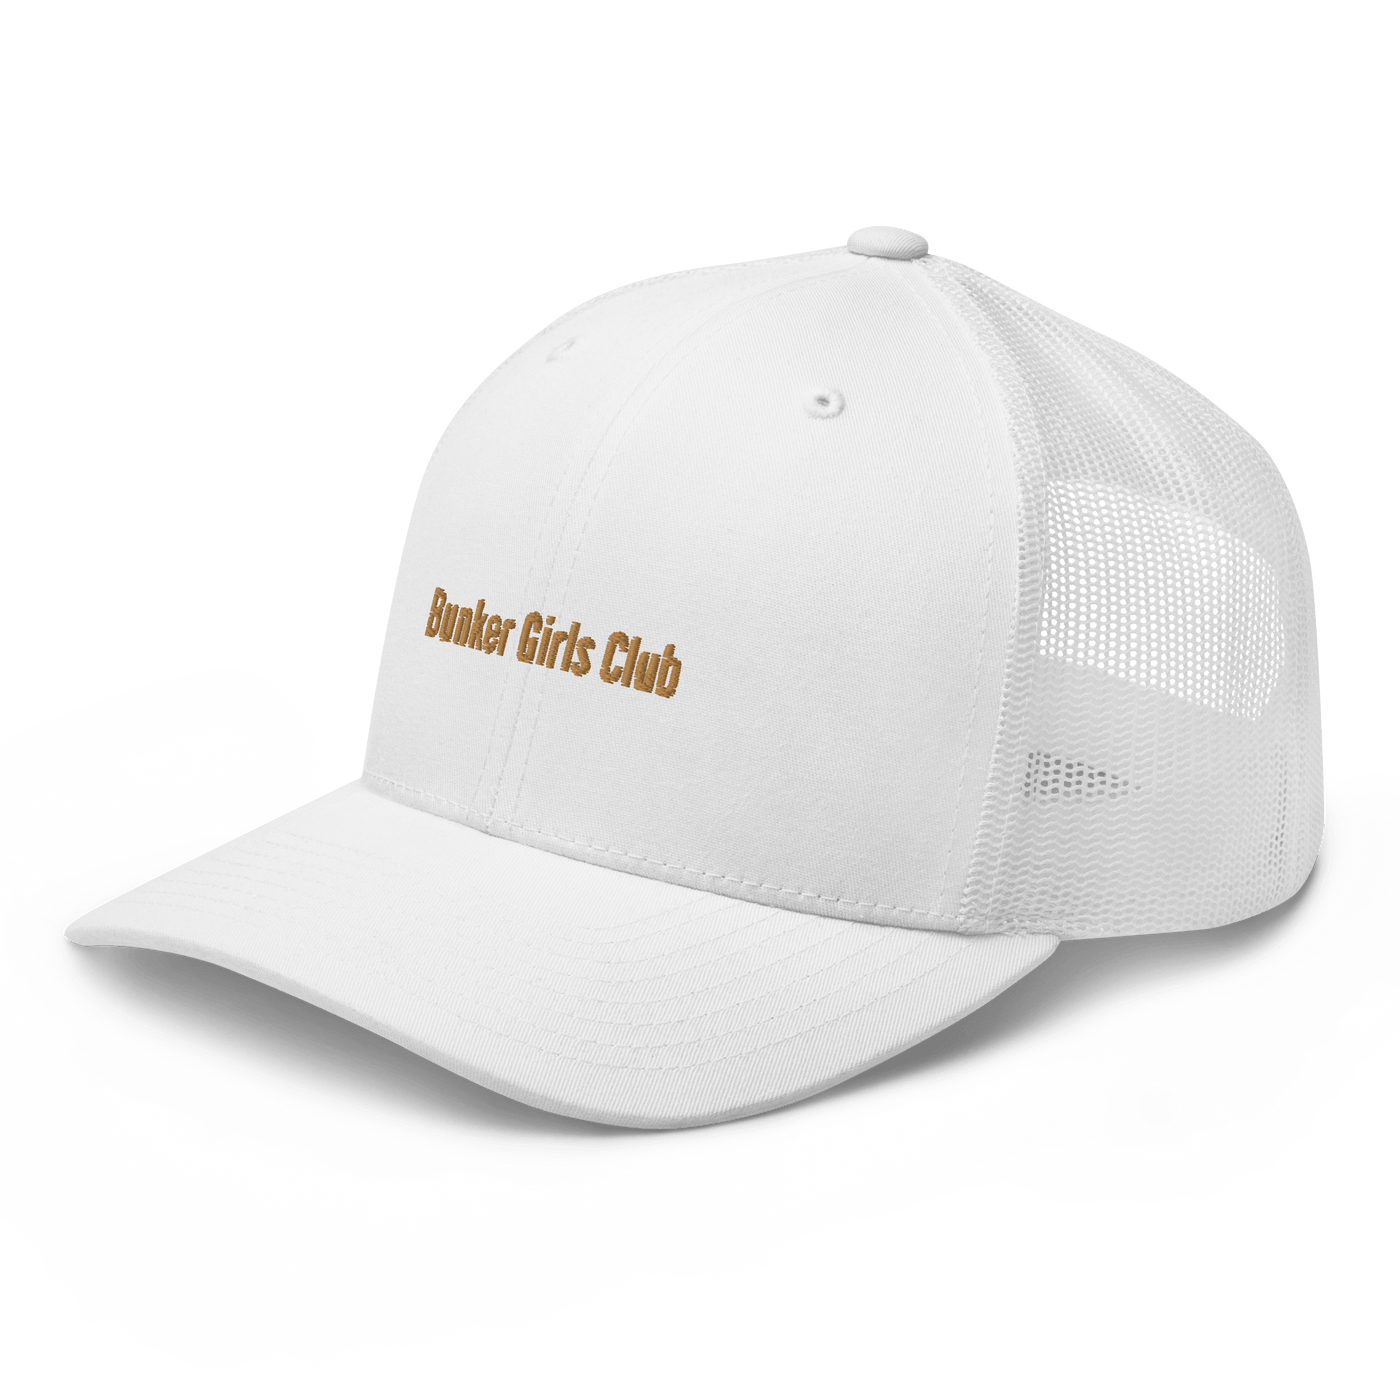 Bunker Girls Club Trucker Cap - White - - Just Another Cap Store